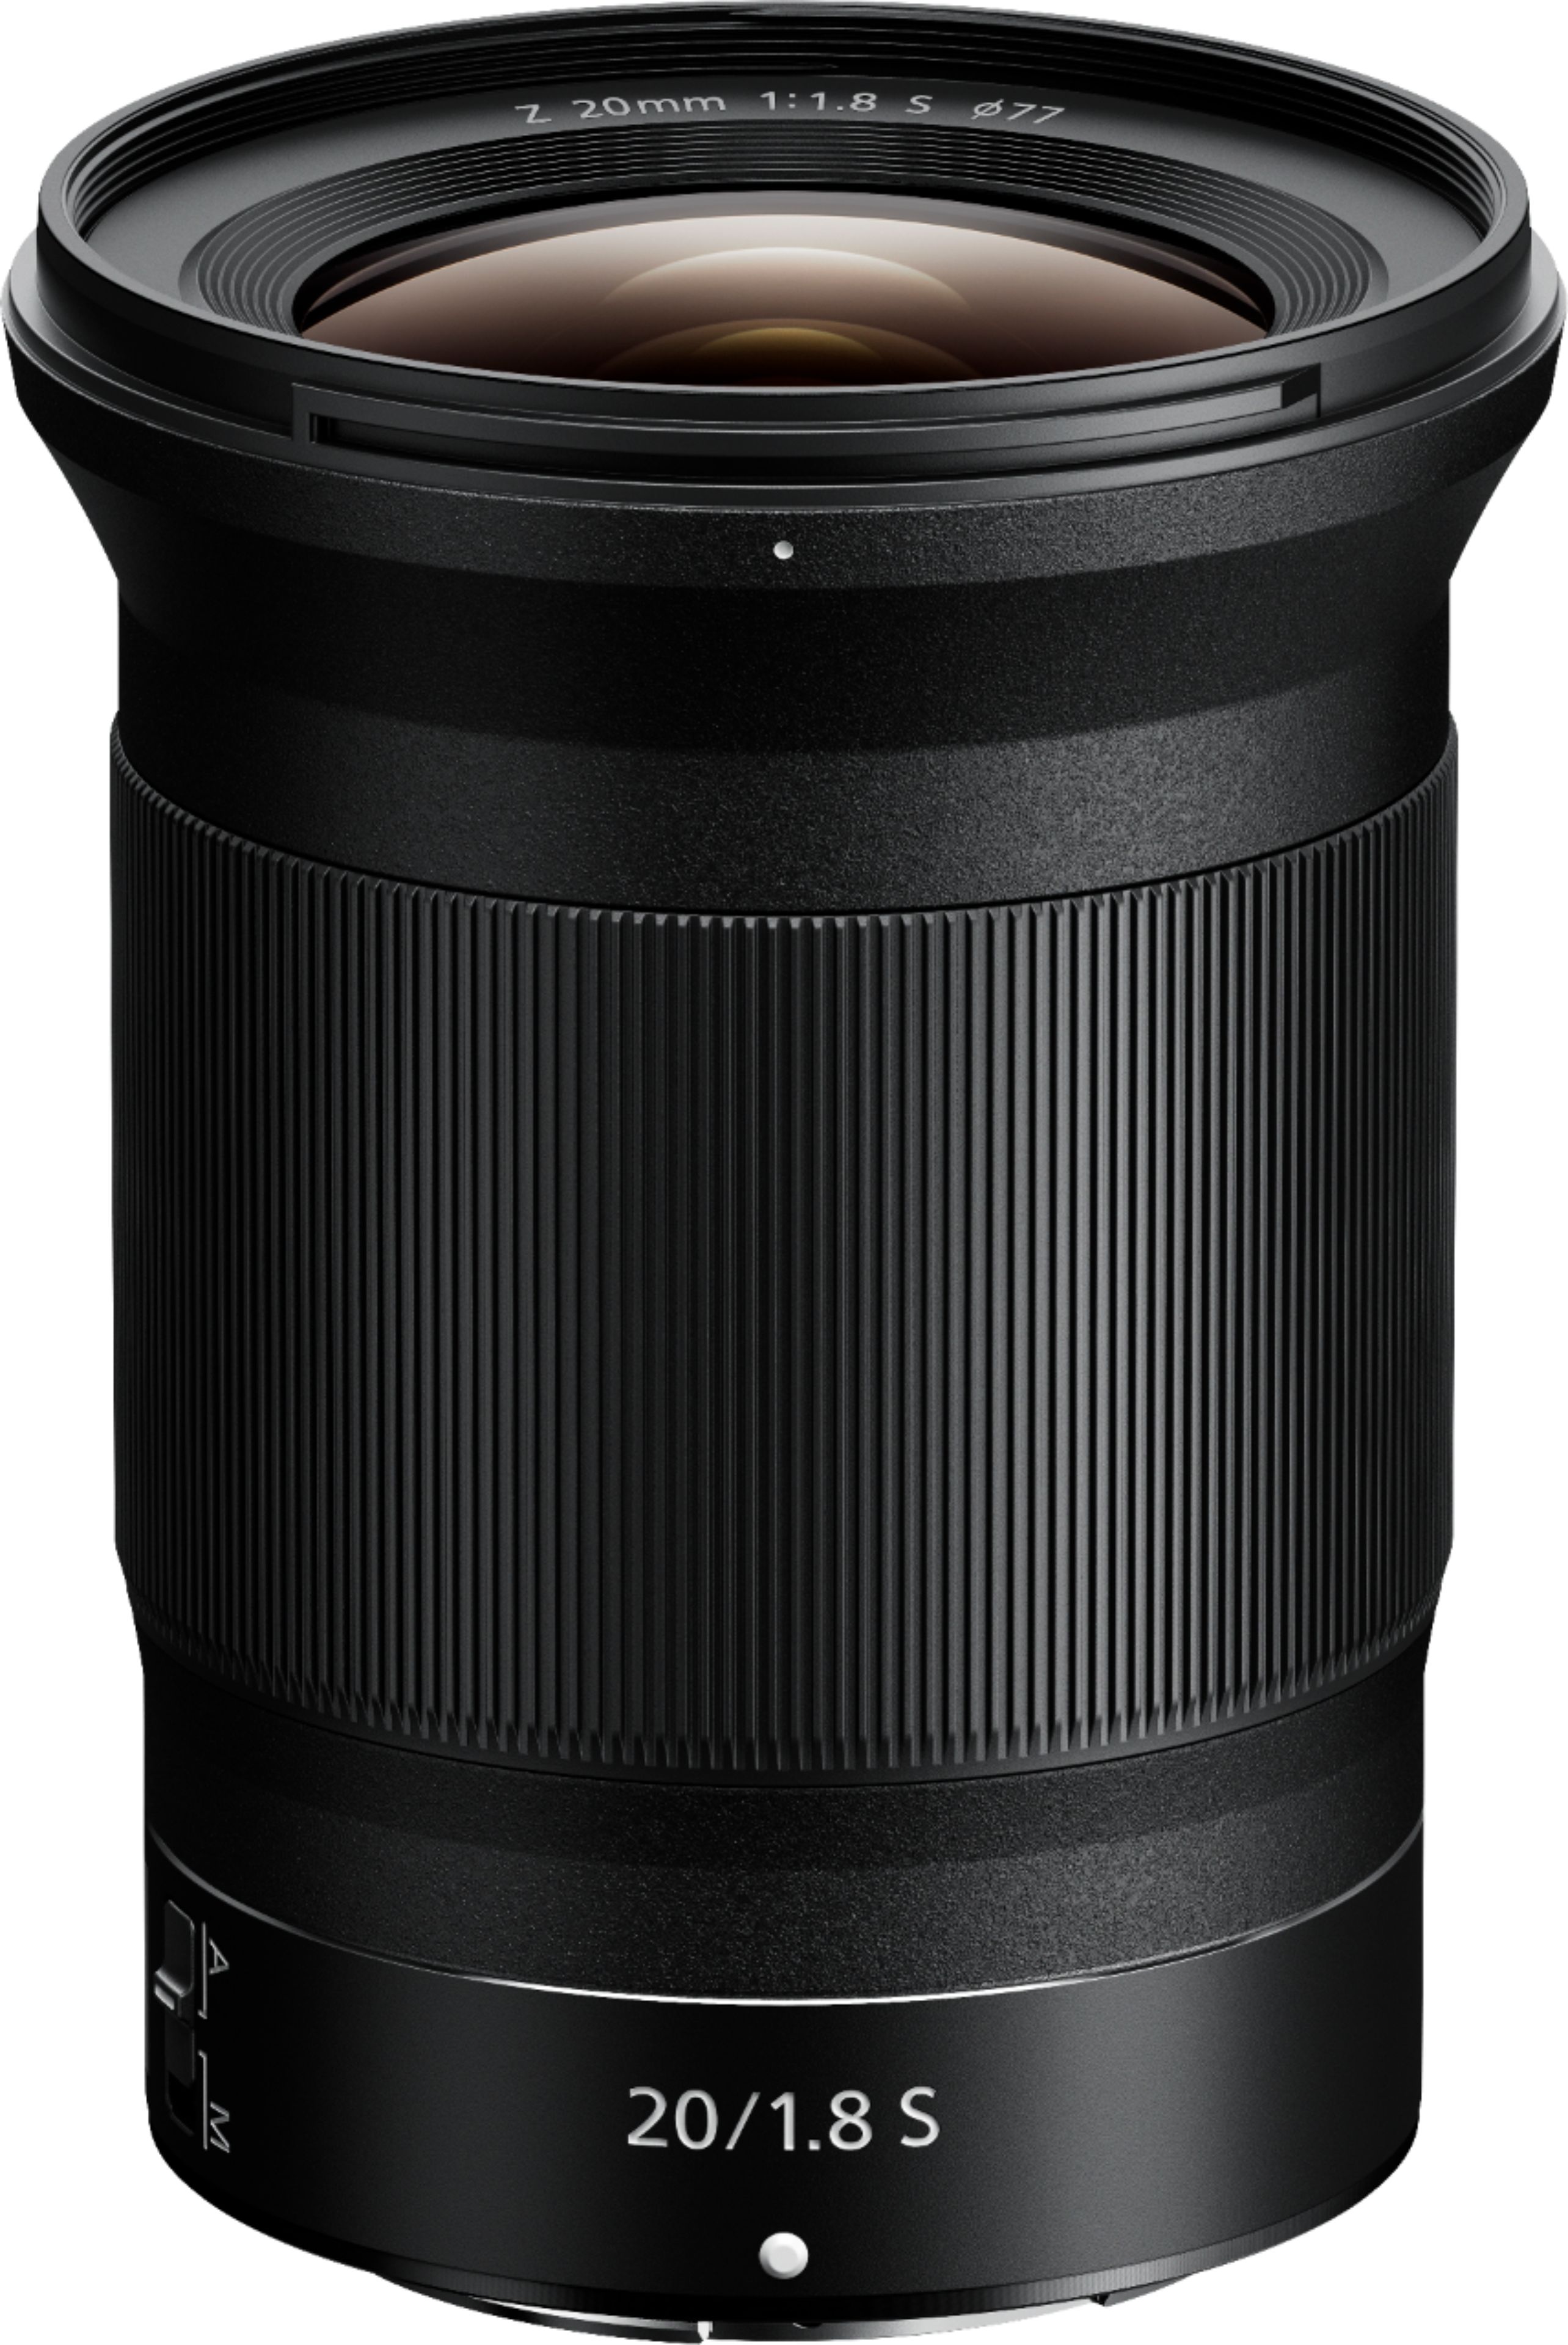 NIKKOR Z 20mm f/1.8 S Wide-Angle Prime Lens for Nikon Z Cameras Black 20093  - Best Buy